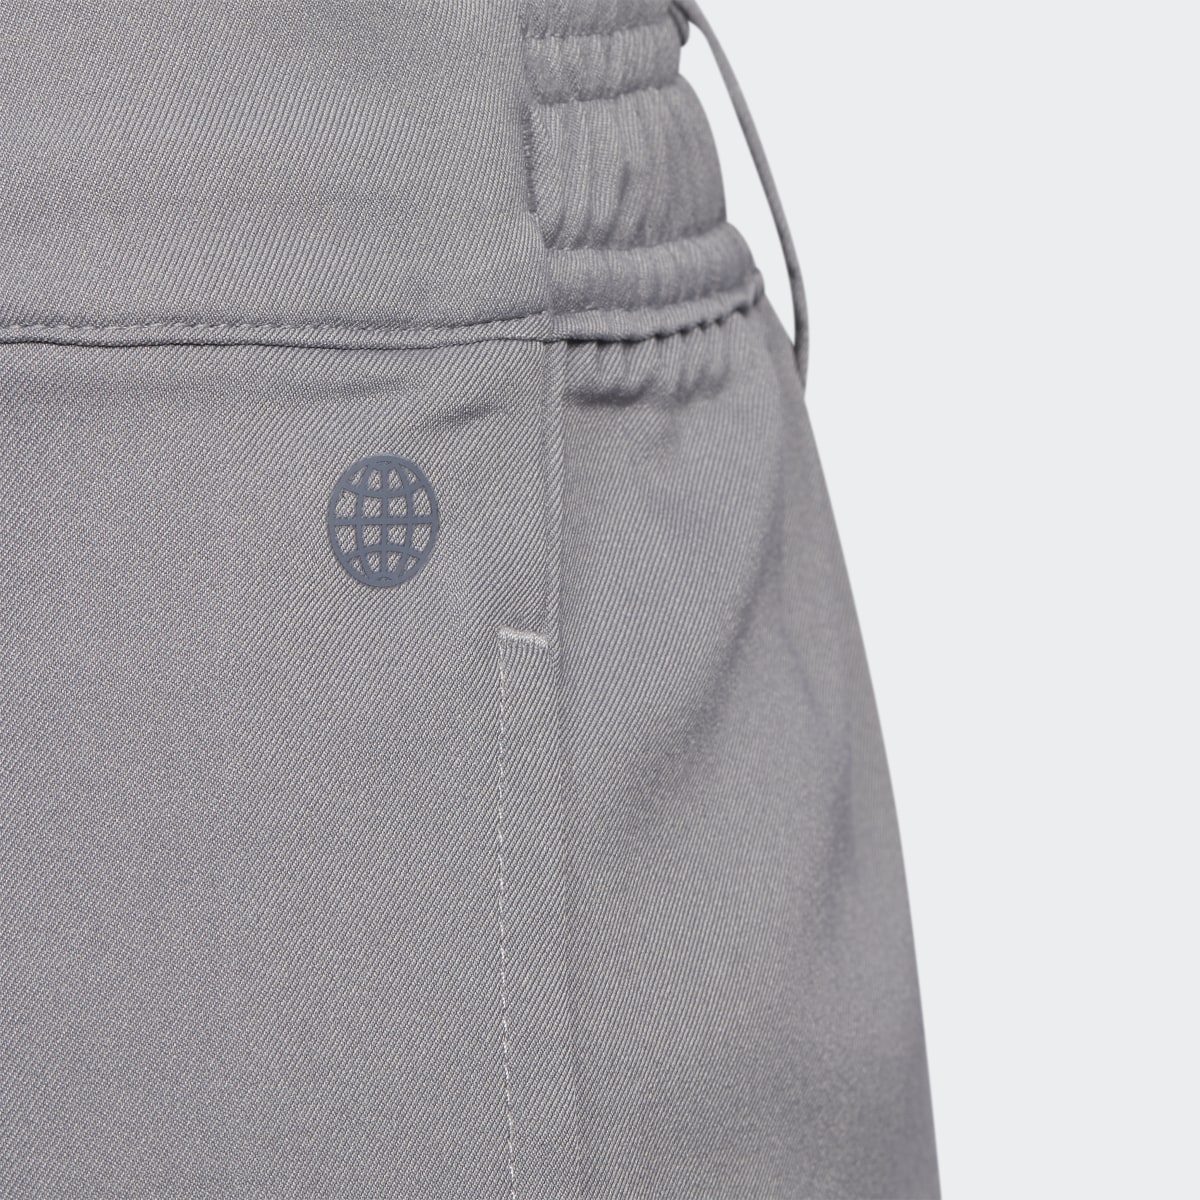 Adidas Ultimate365 Adjustable Golf Shorts. 4